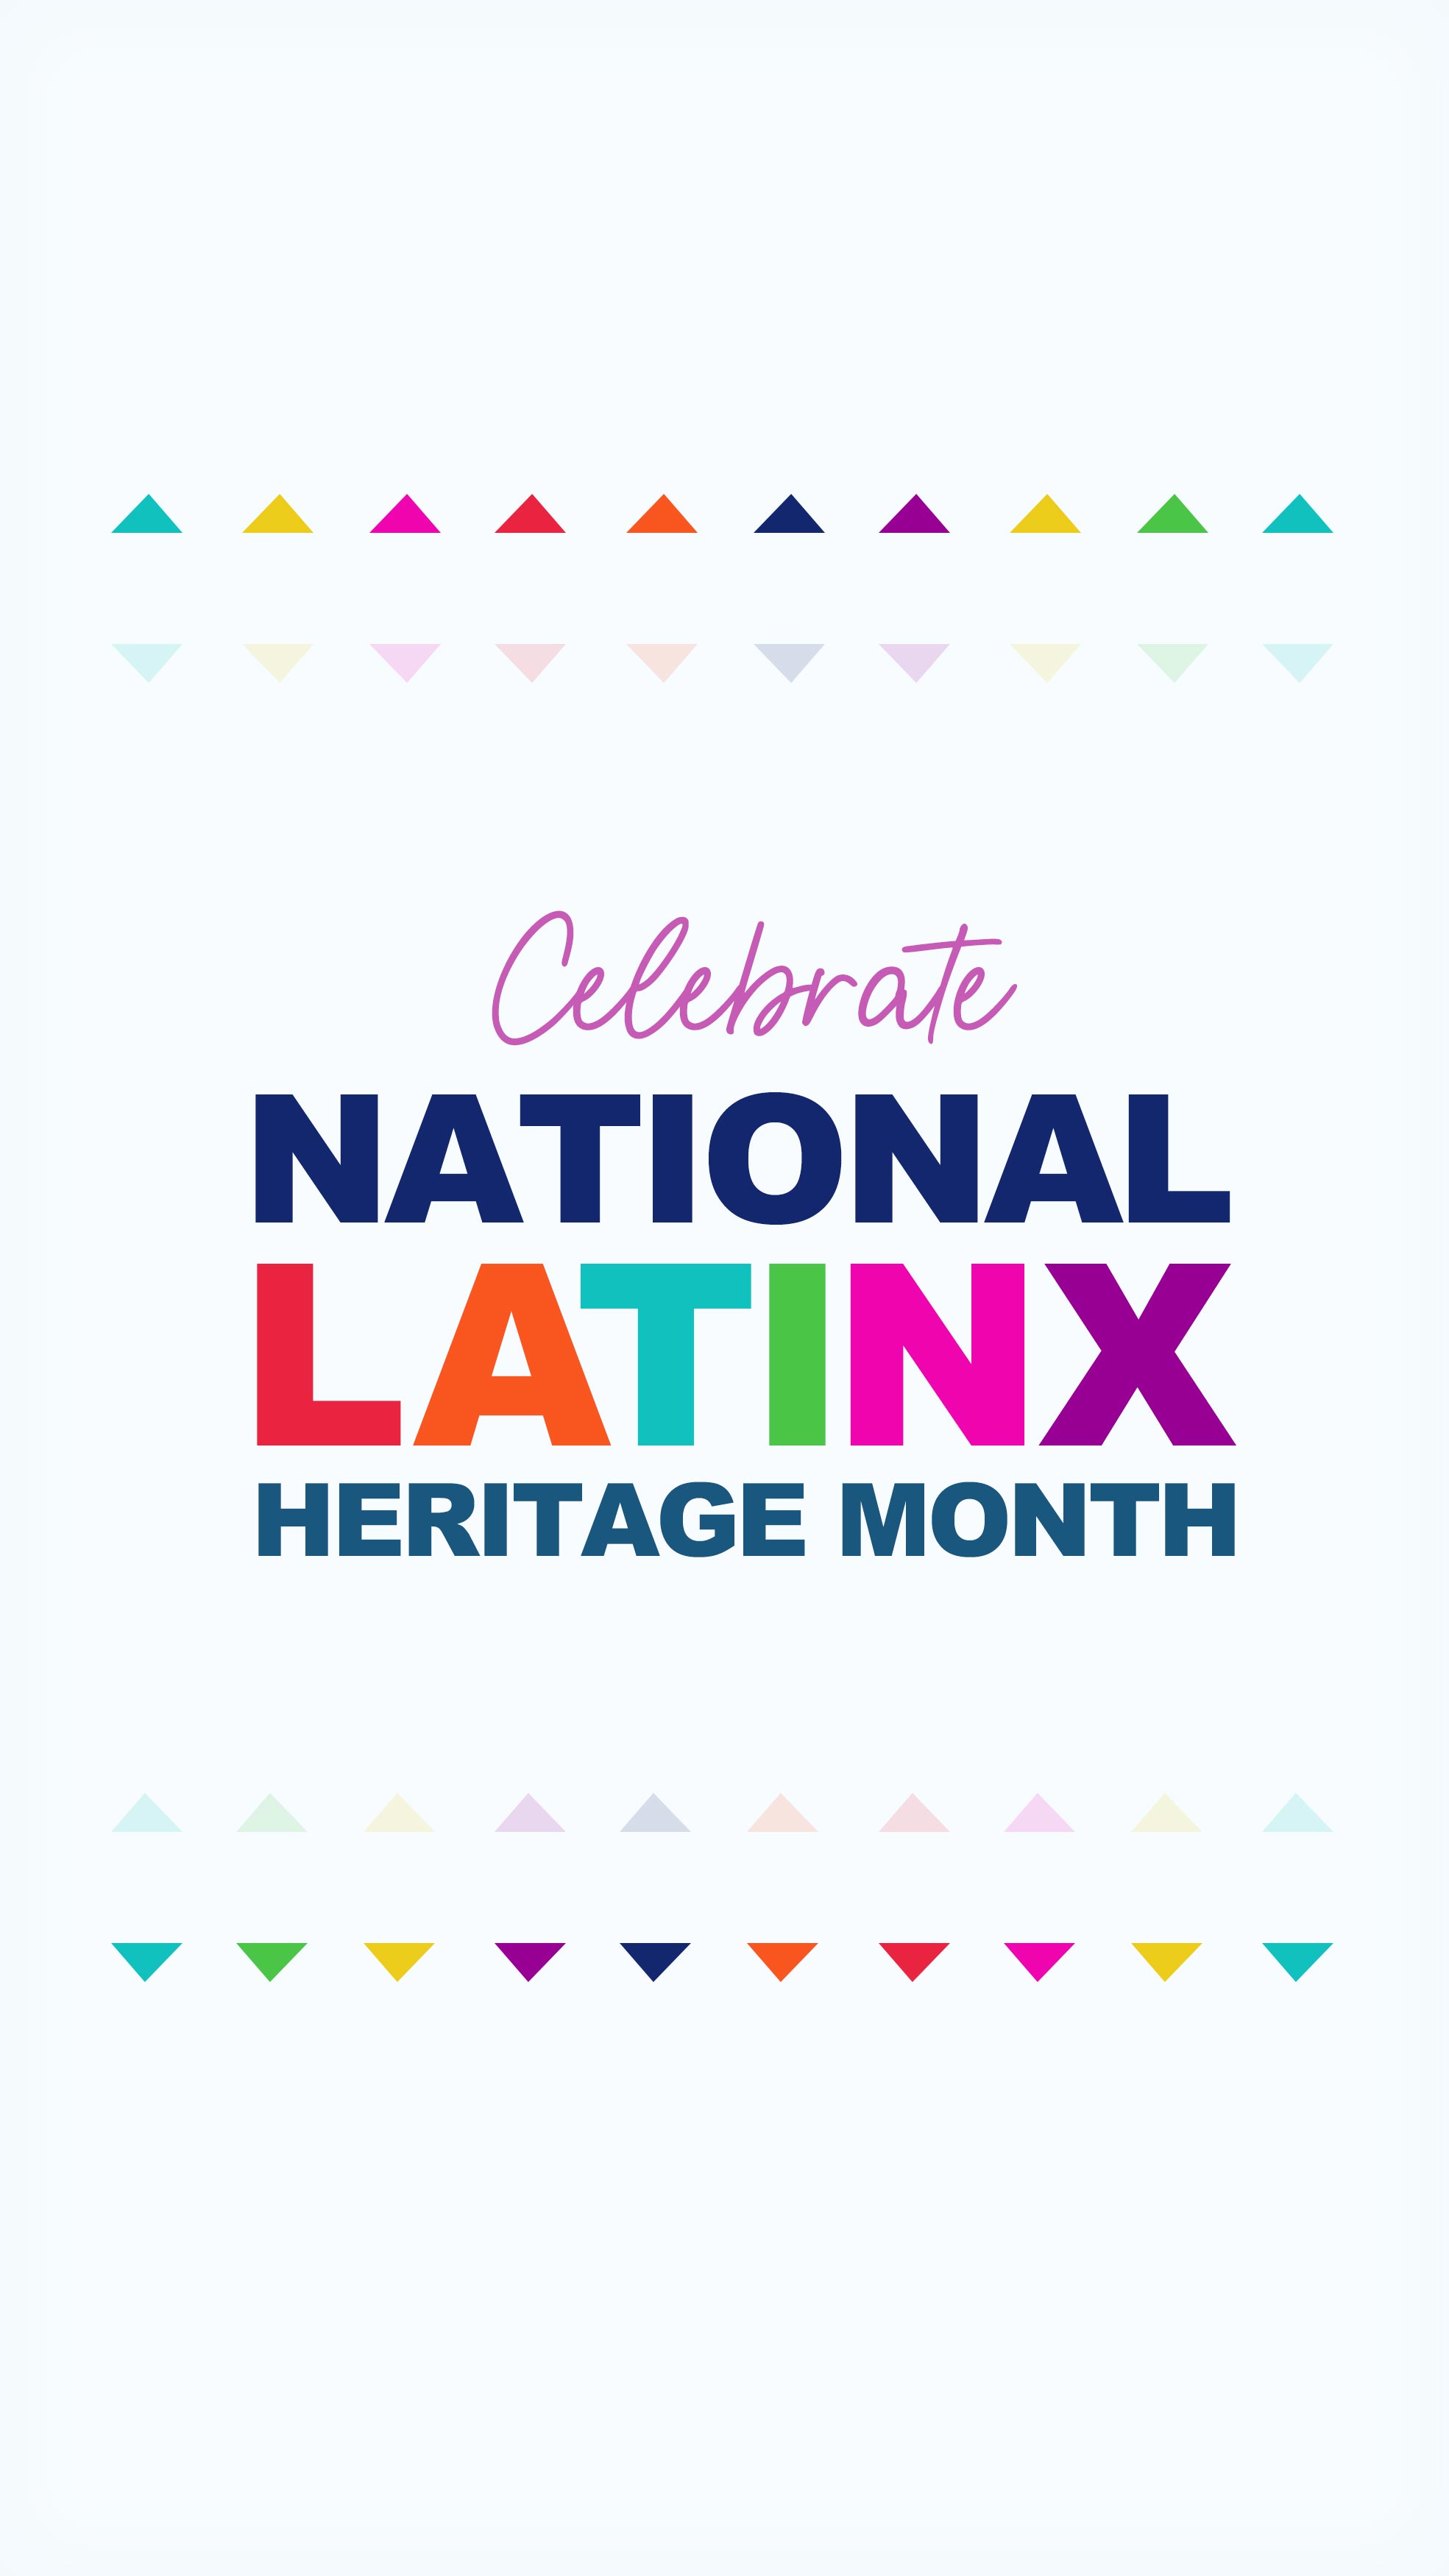 Celebrate National Latinx